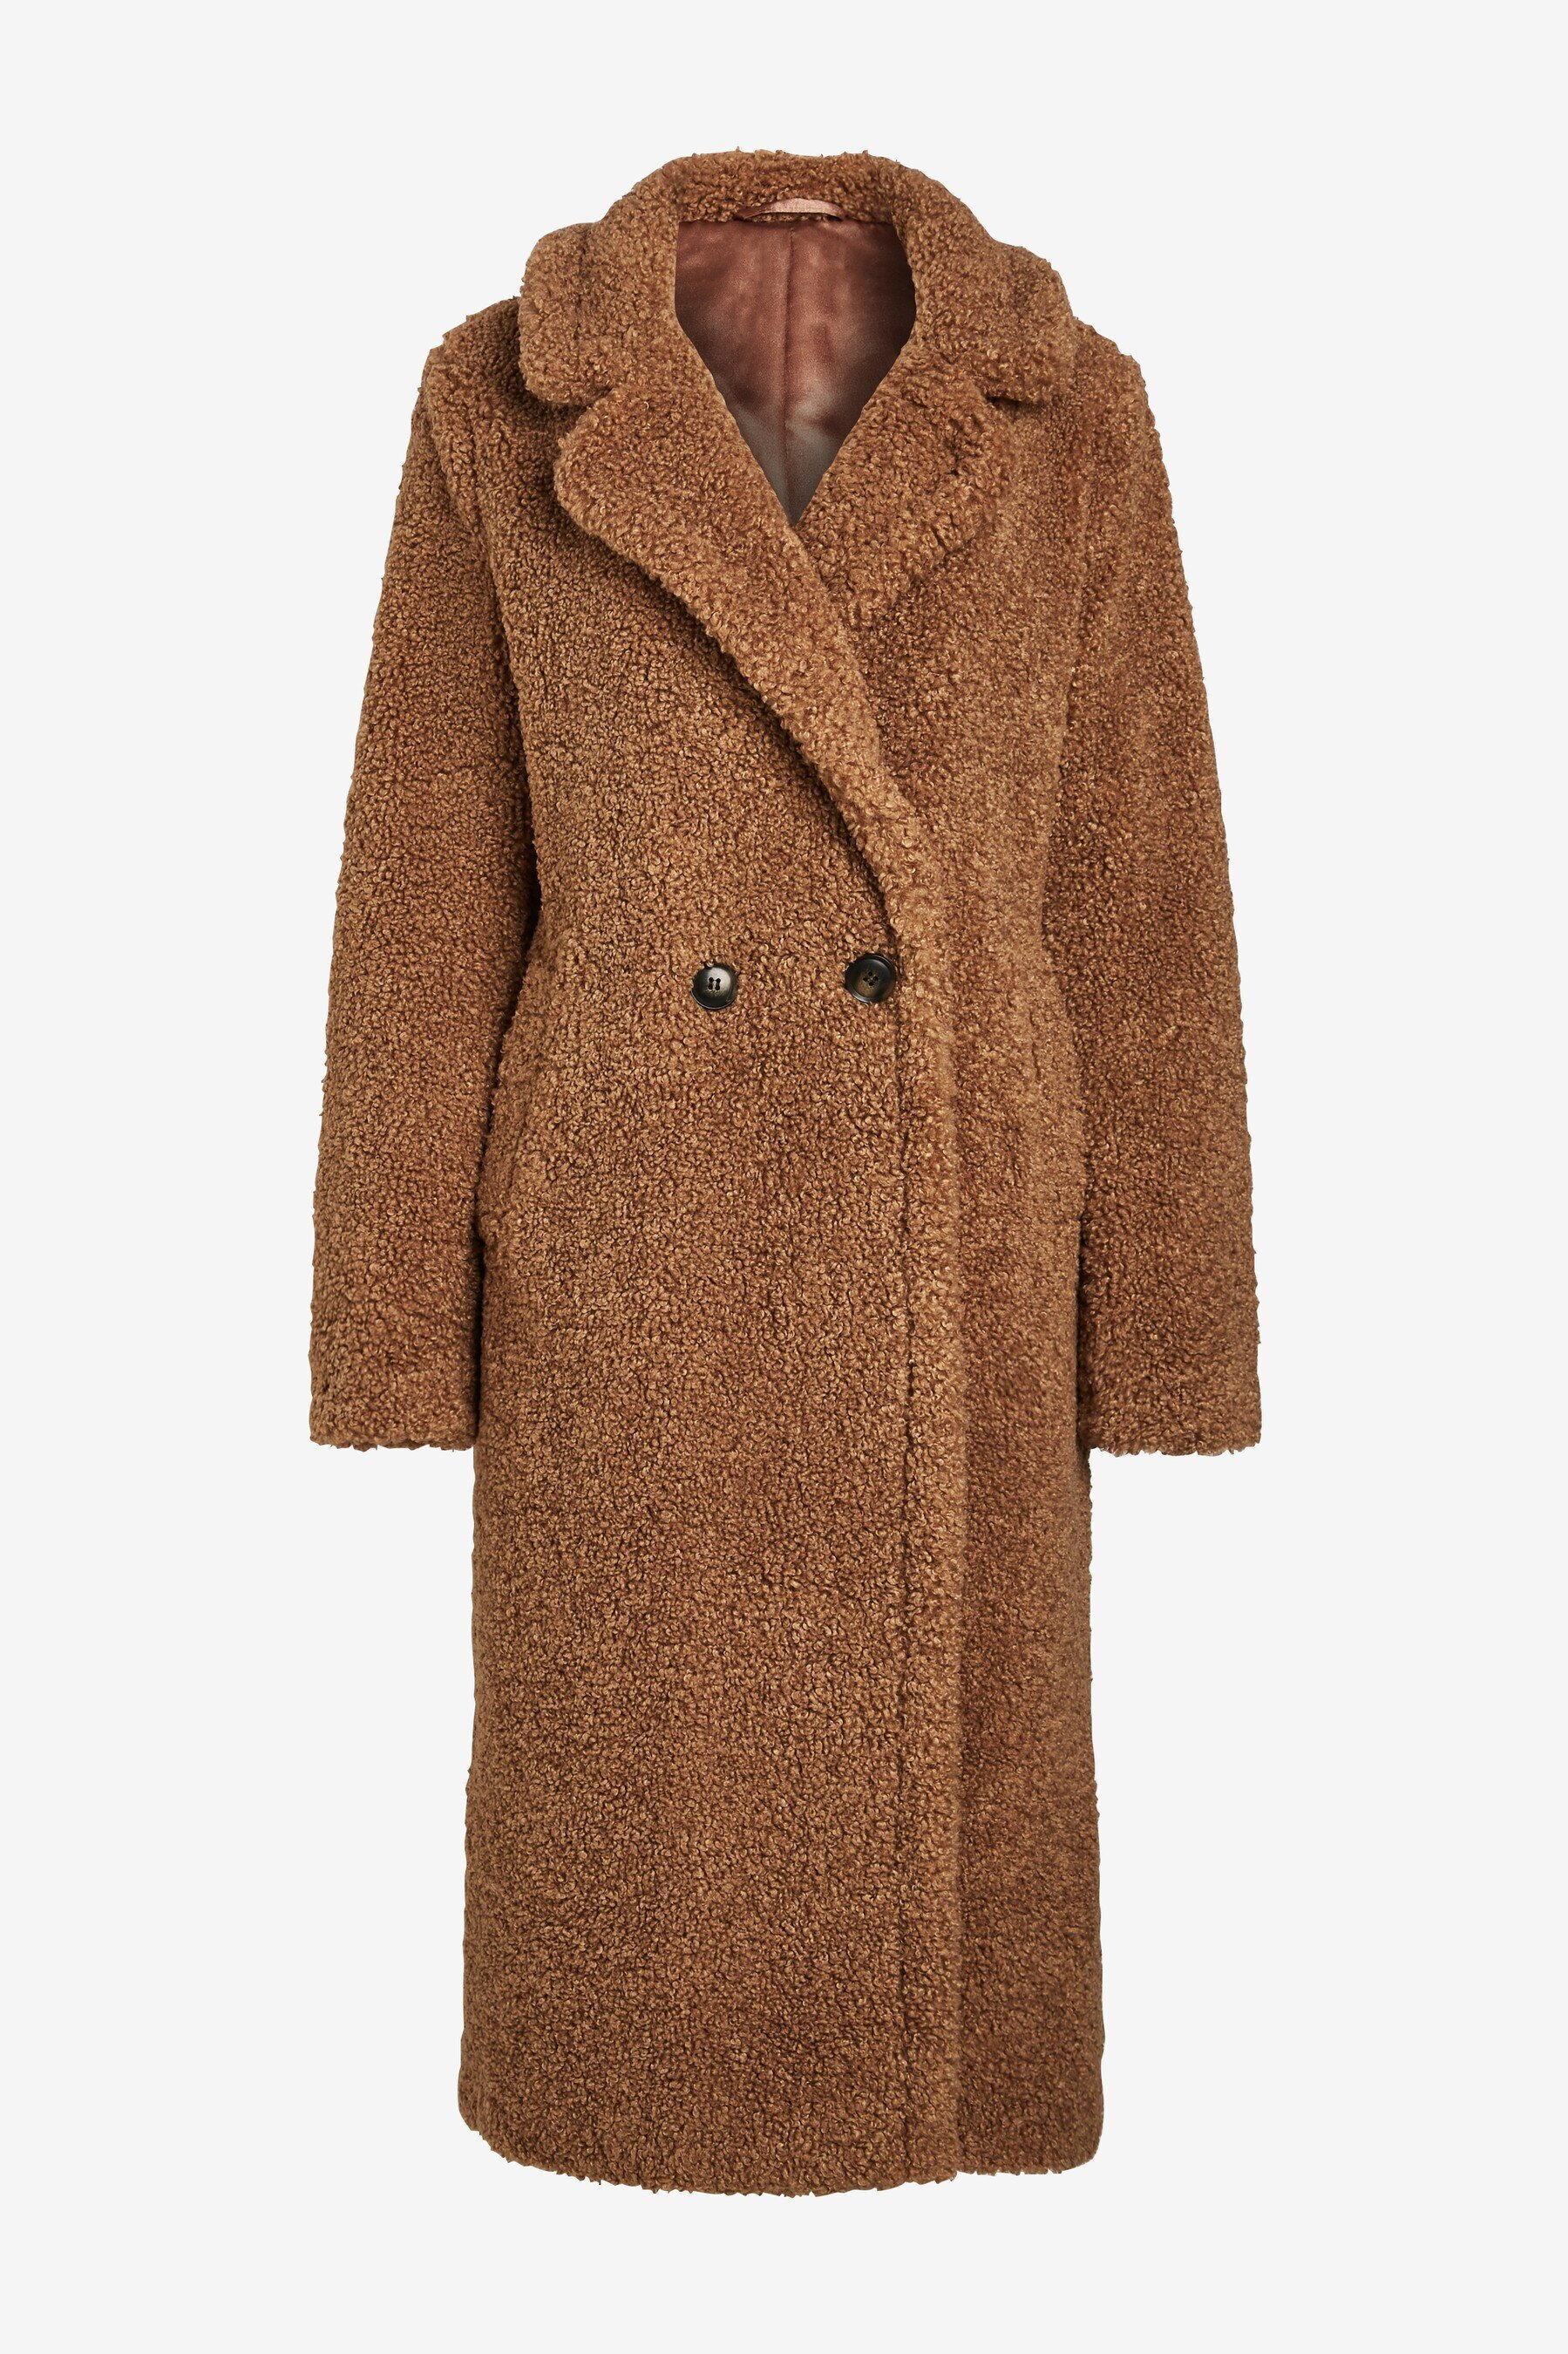 Coat, £62, Next